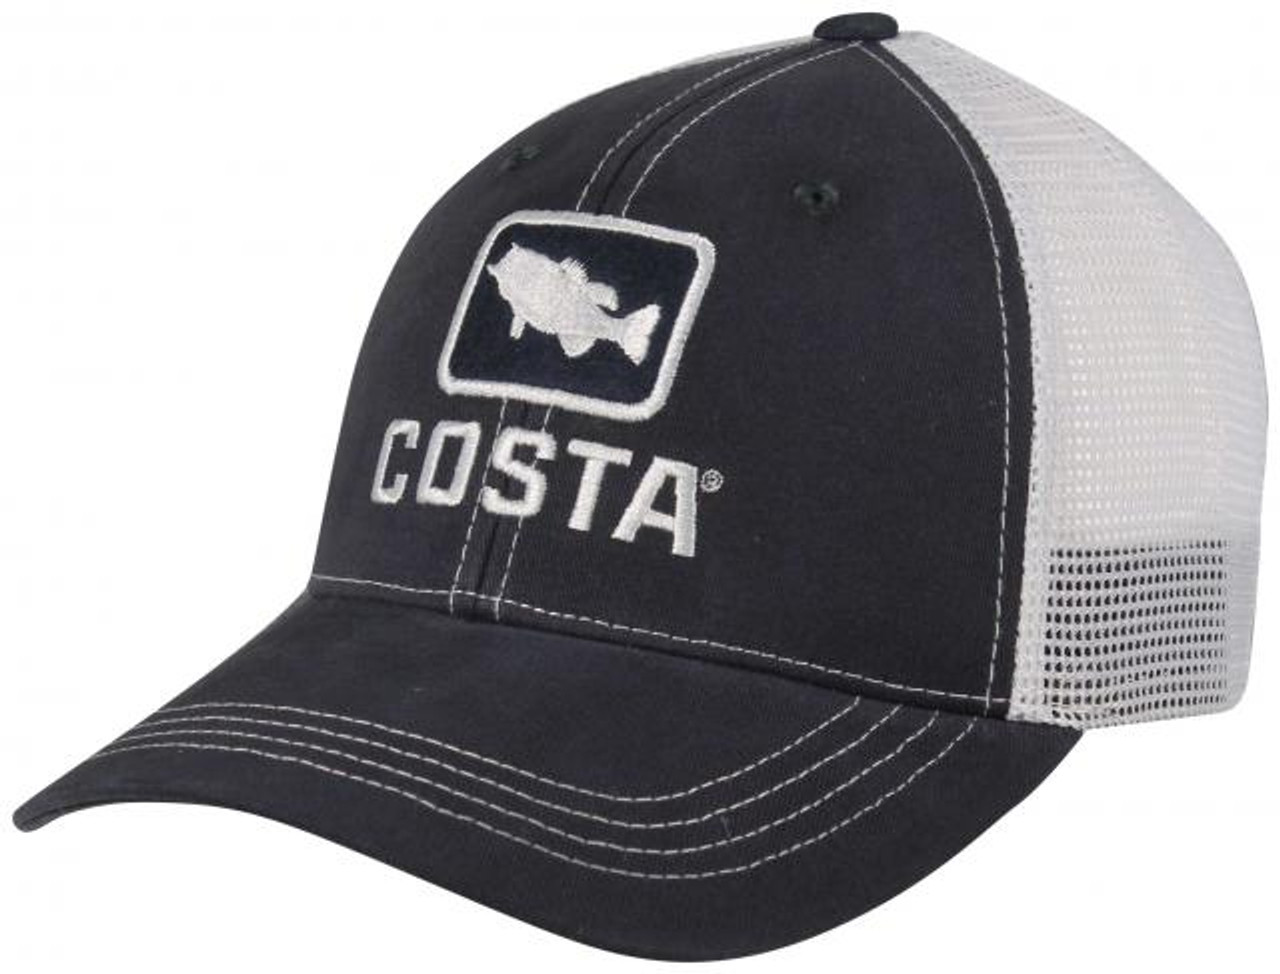 Costa Bass Trucker Hat - Navy - Goodwood Hardware